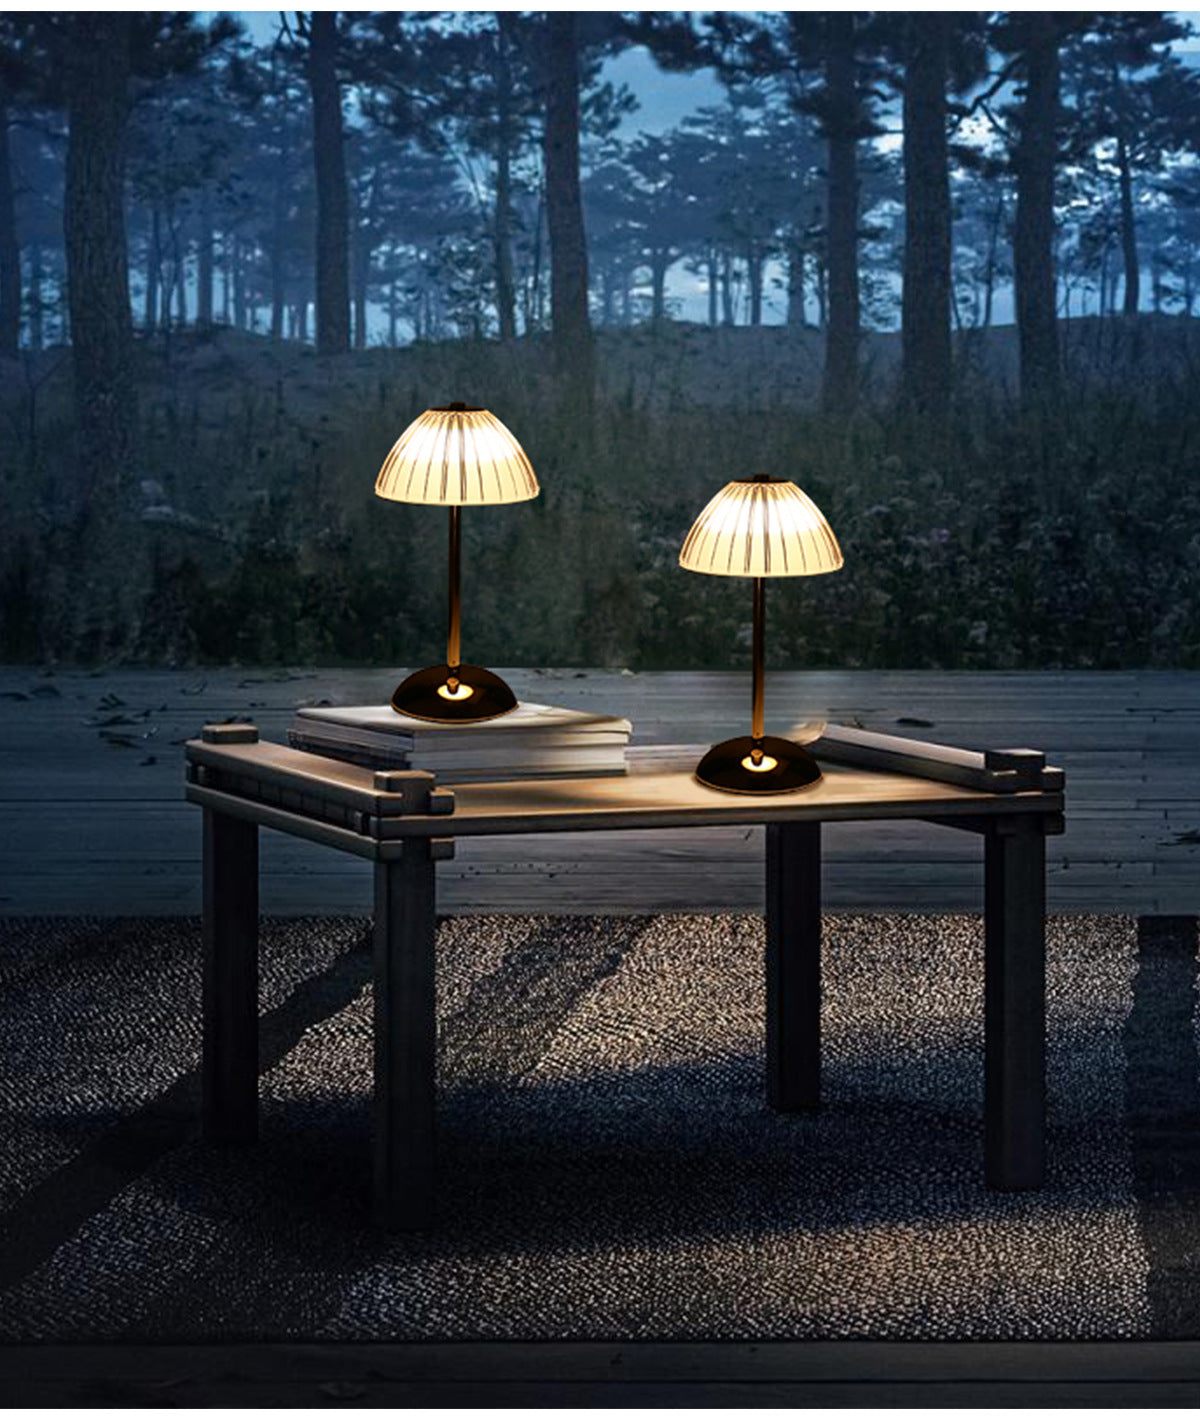 Postmodern LED Crystal Table Lamp Bedroom Bedside Table Lamp Atmosphere Light